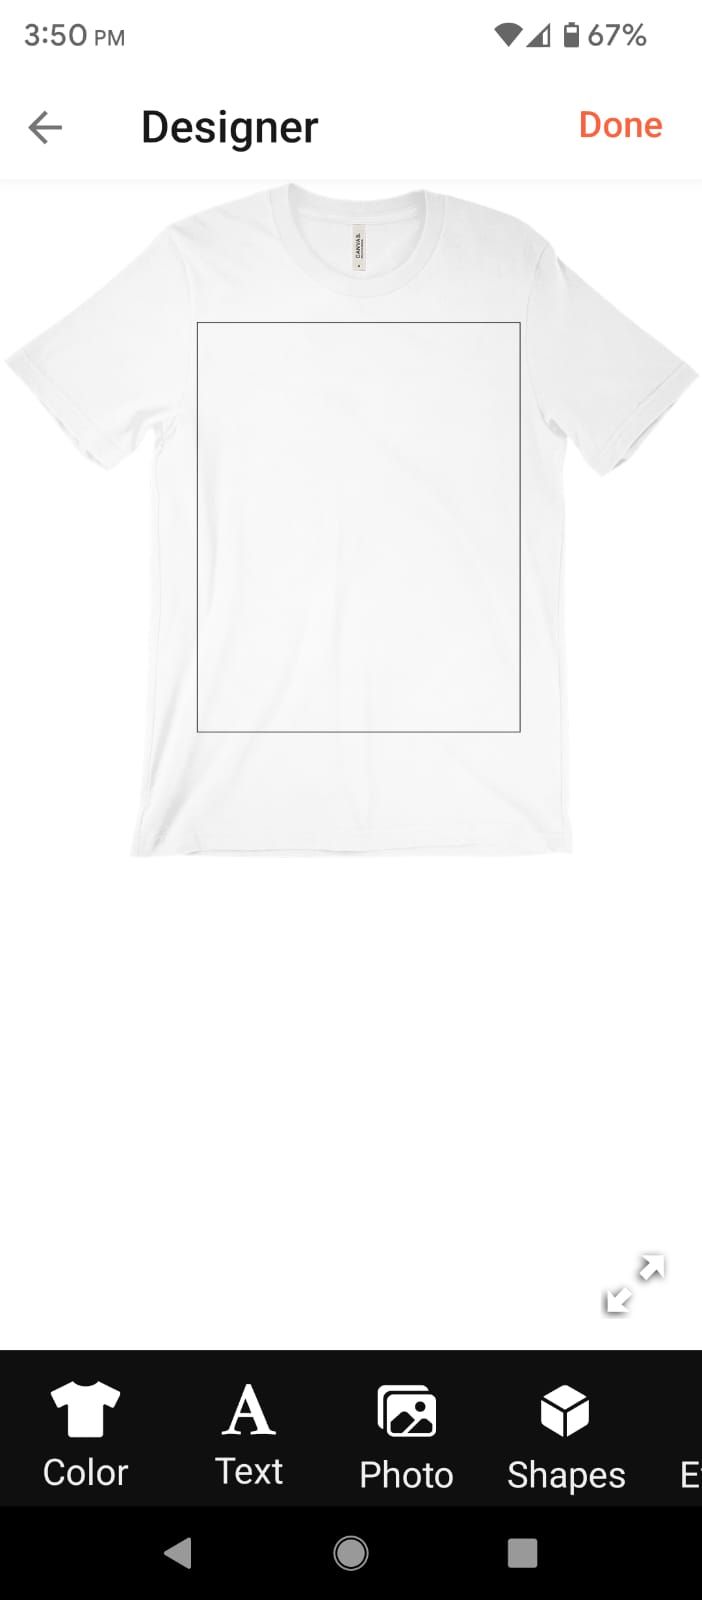 OShirt - Designing the T-Shirt